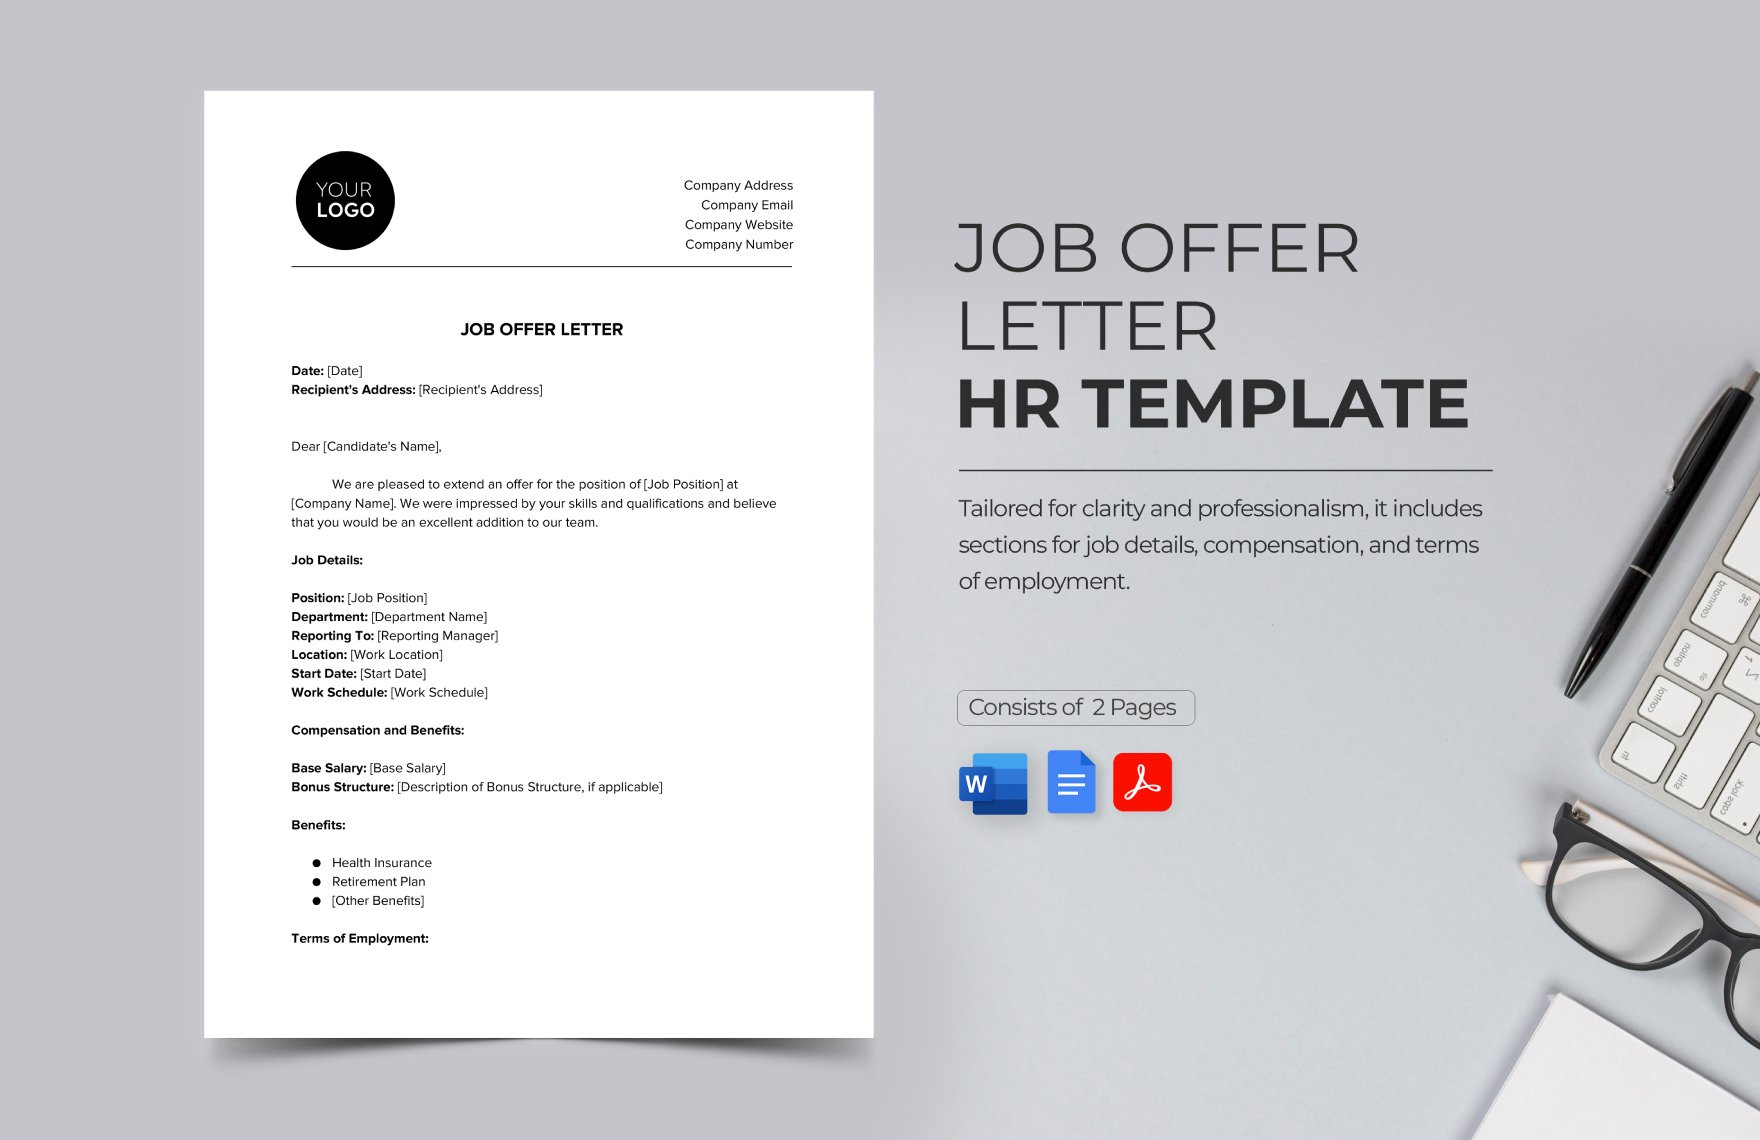 Job Offer Letter HR Template